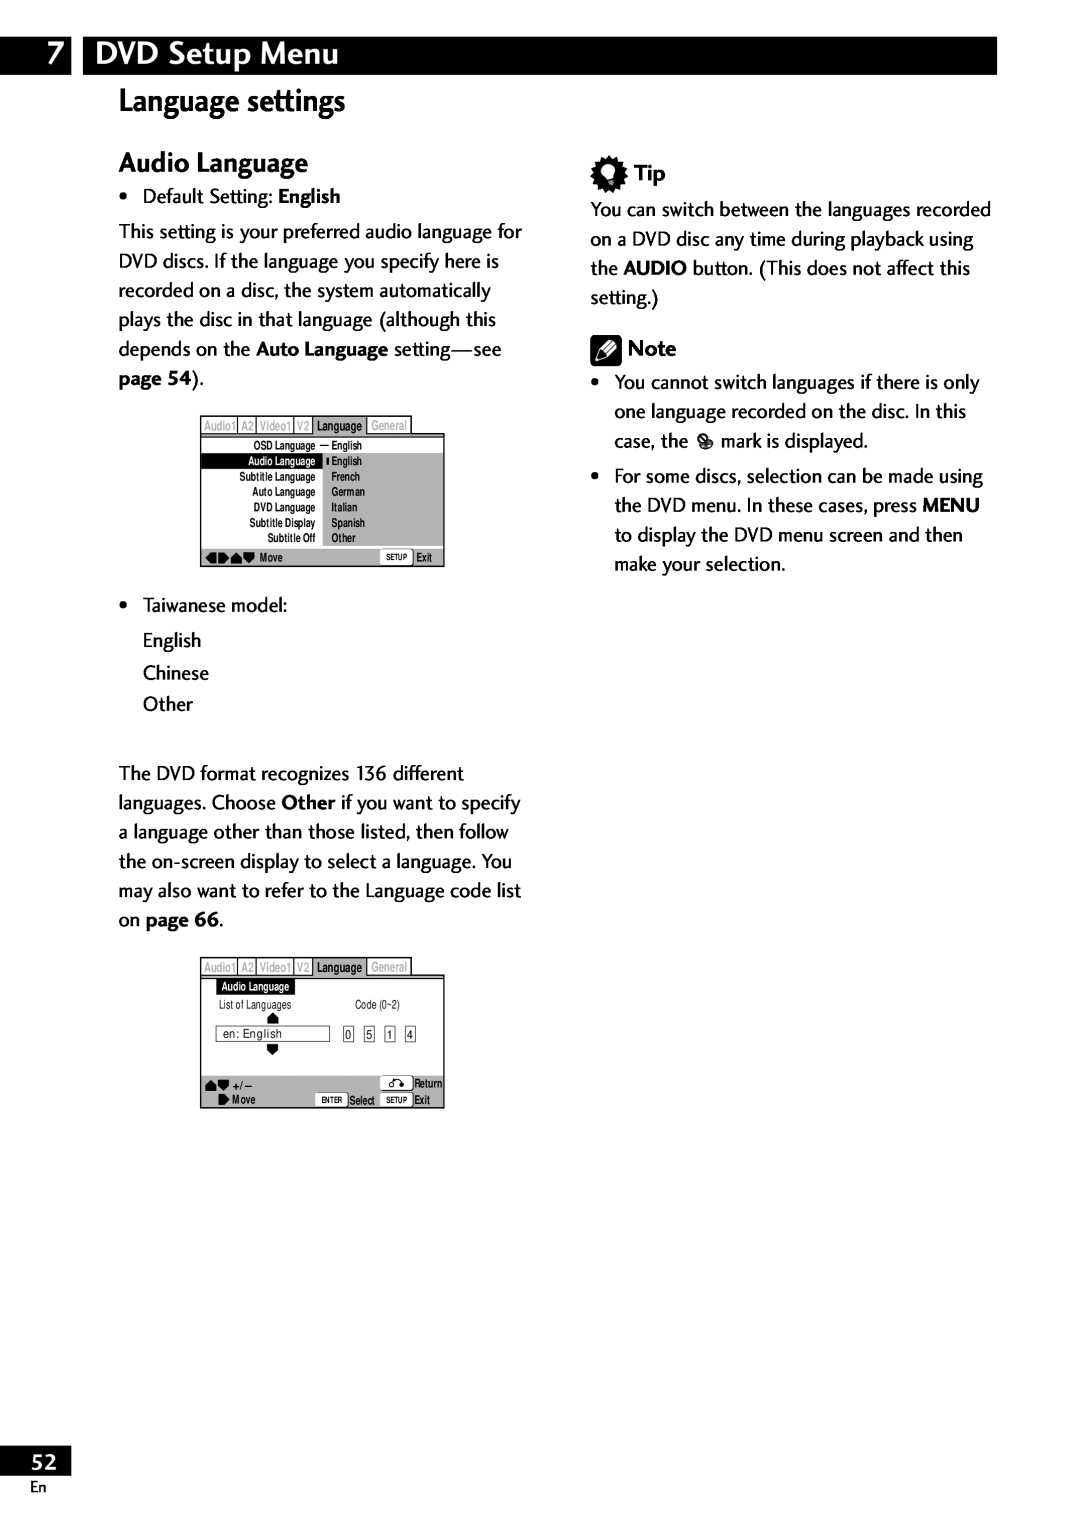 Pioneer DV-S733A operating instructions Audio Language, DVD Setup Menu Language settings 